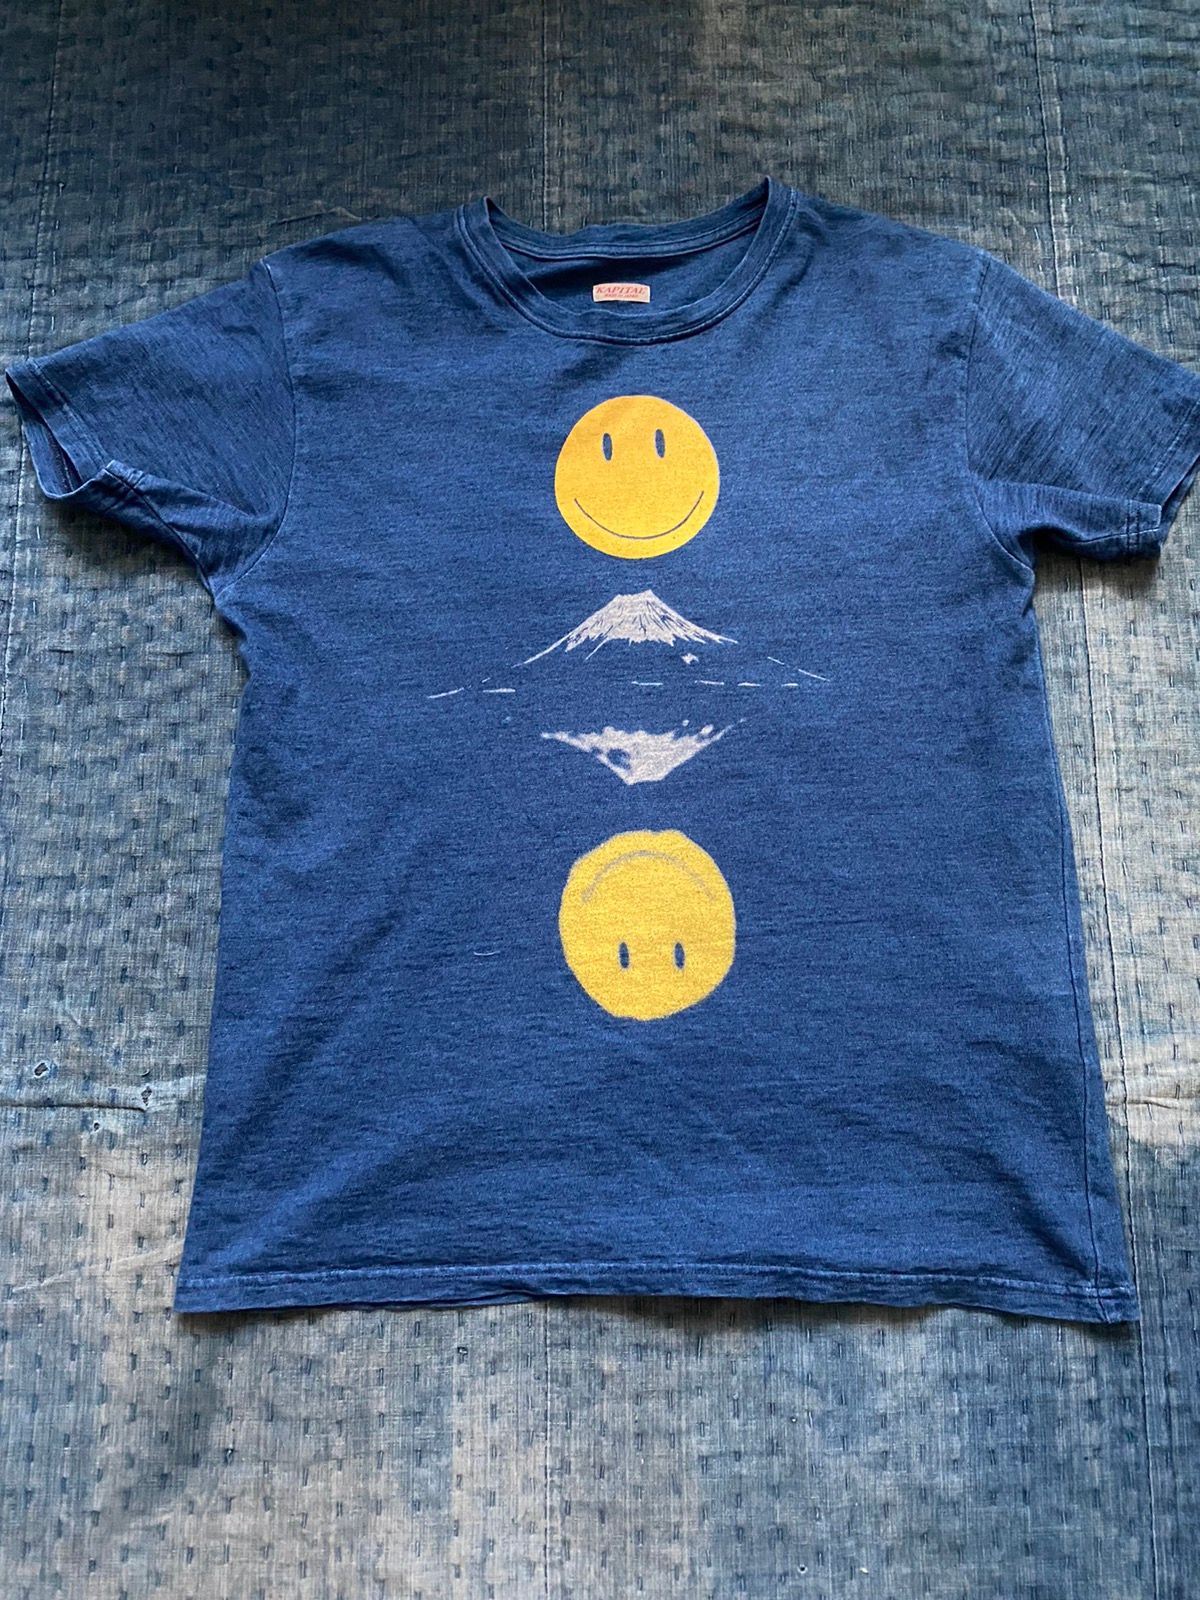 Kapital Smiley T Shirt | Grailed